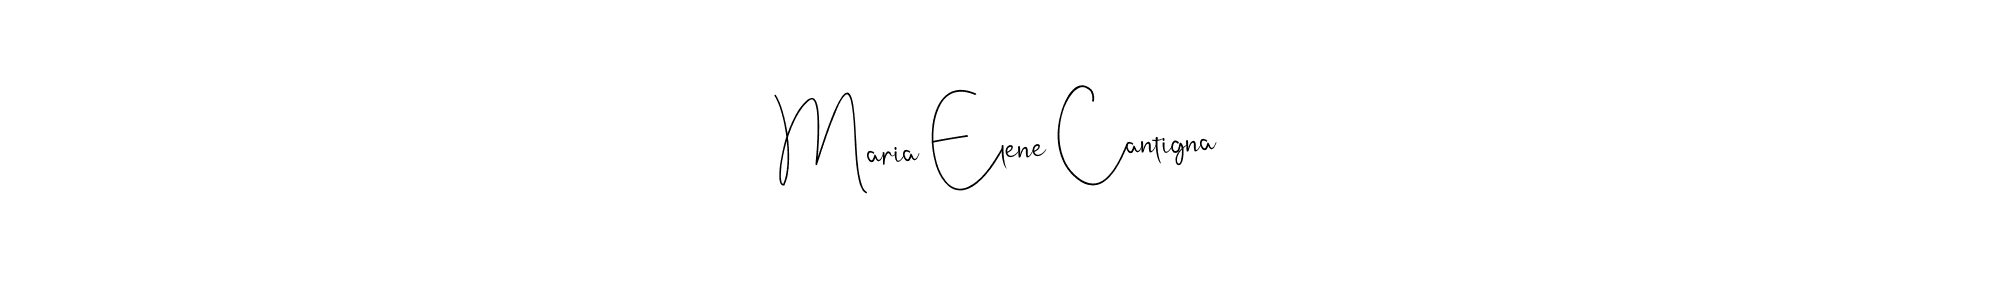 How to Draw Maria Elene Cantigna signature style? Andilay-7BmLP is a latest design signature styles for name Maria Elene Cantigna. Maria Elene Cantigna signature style 4 images and pictures png